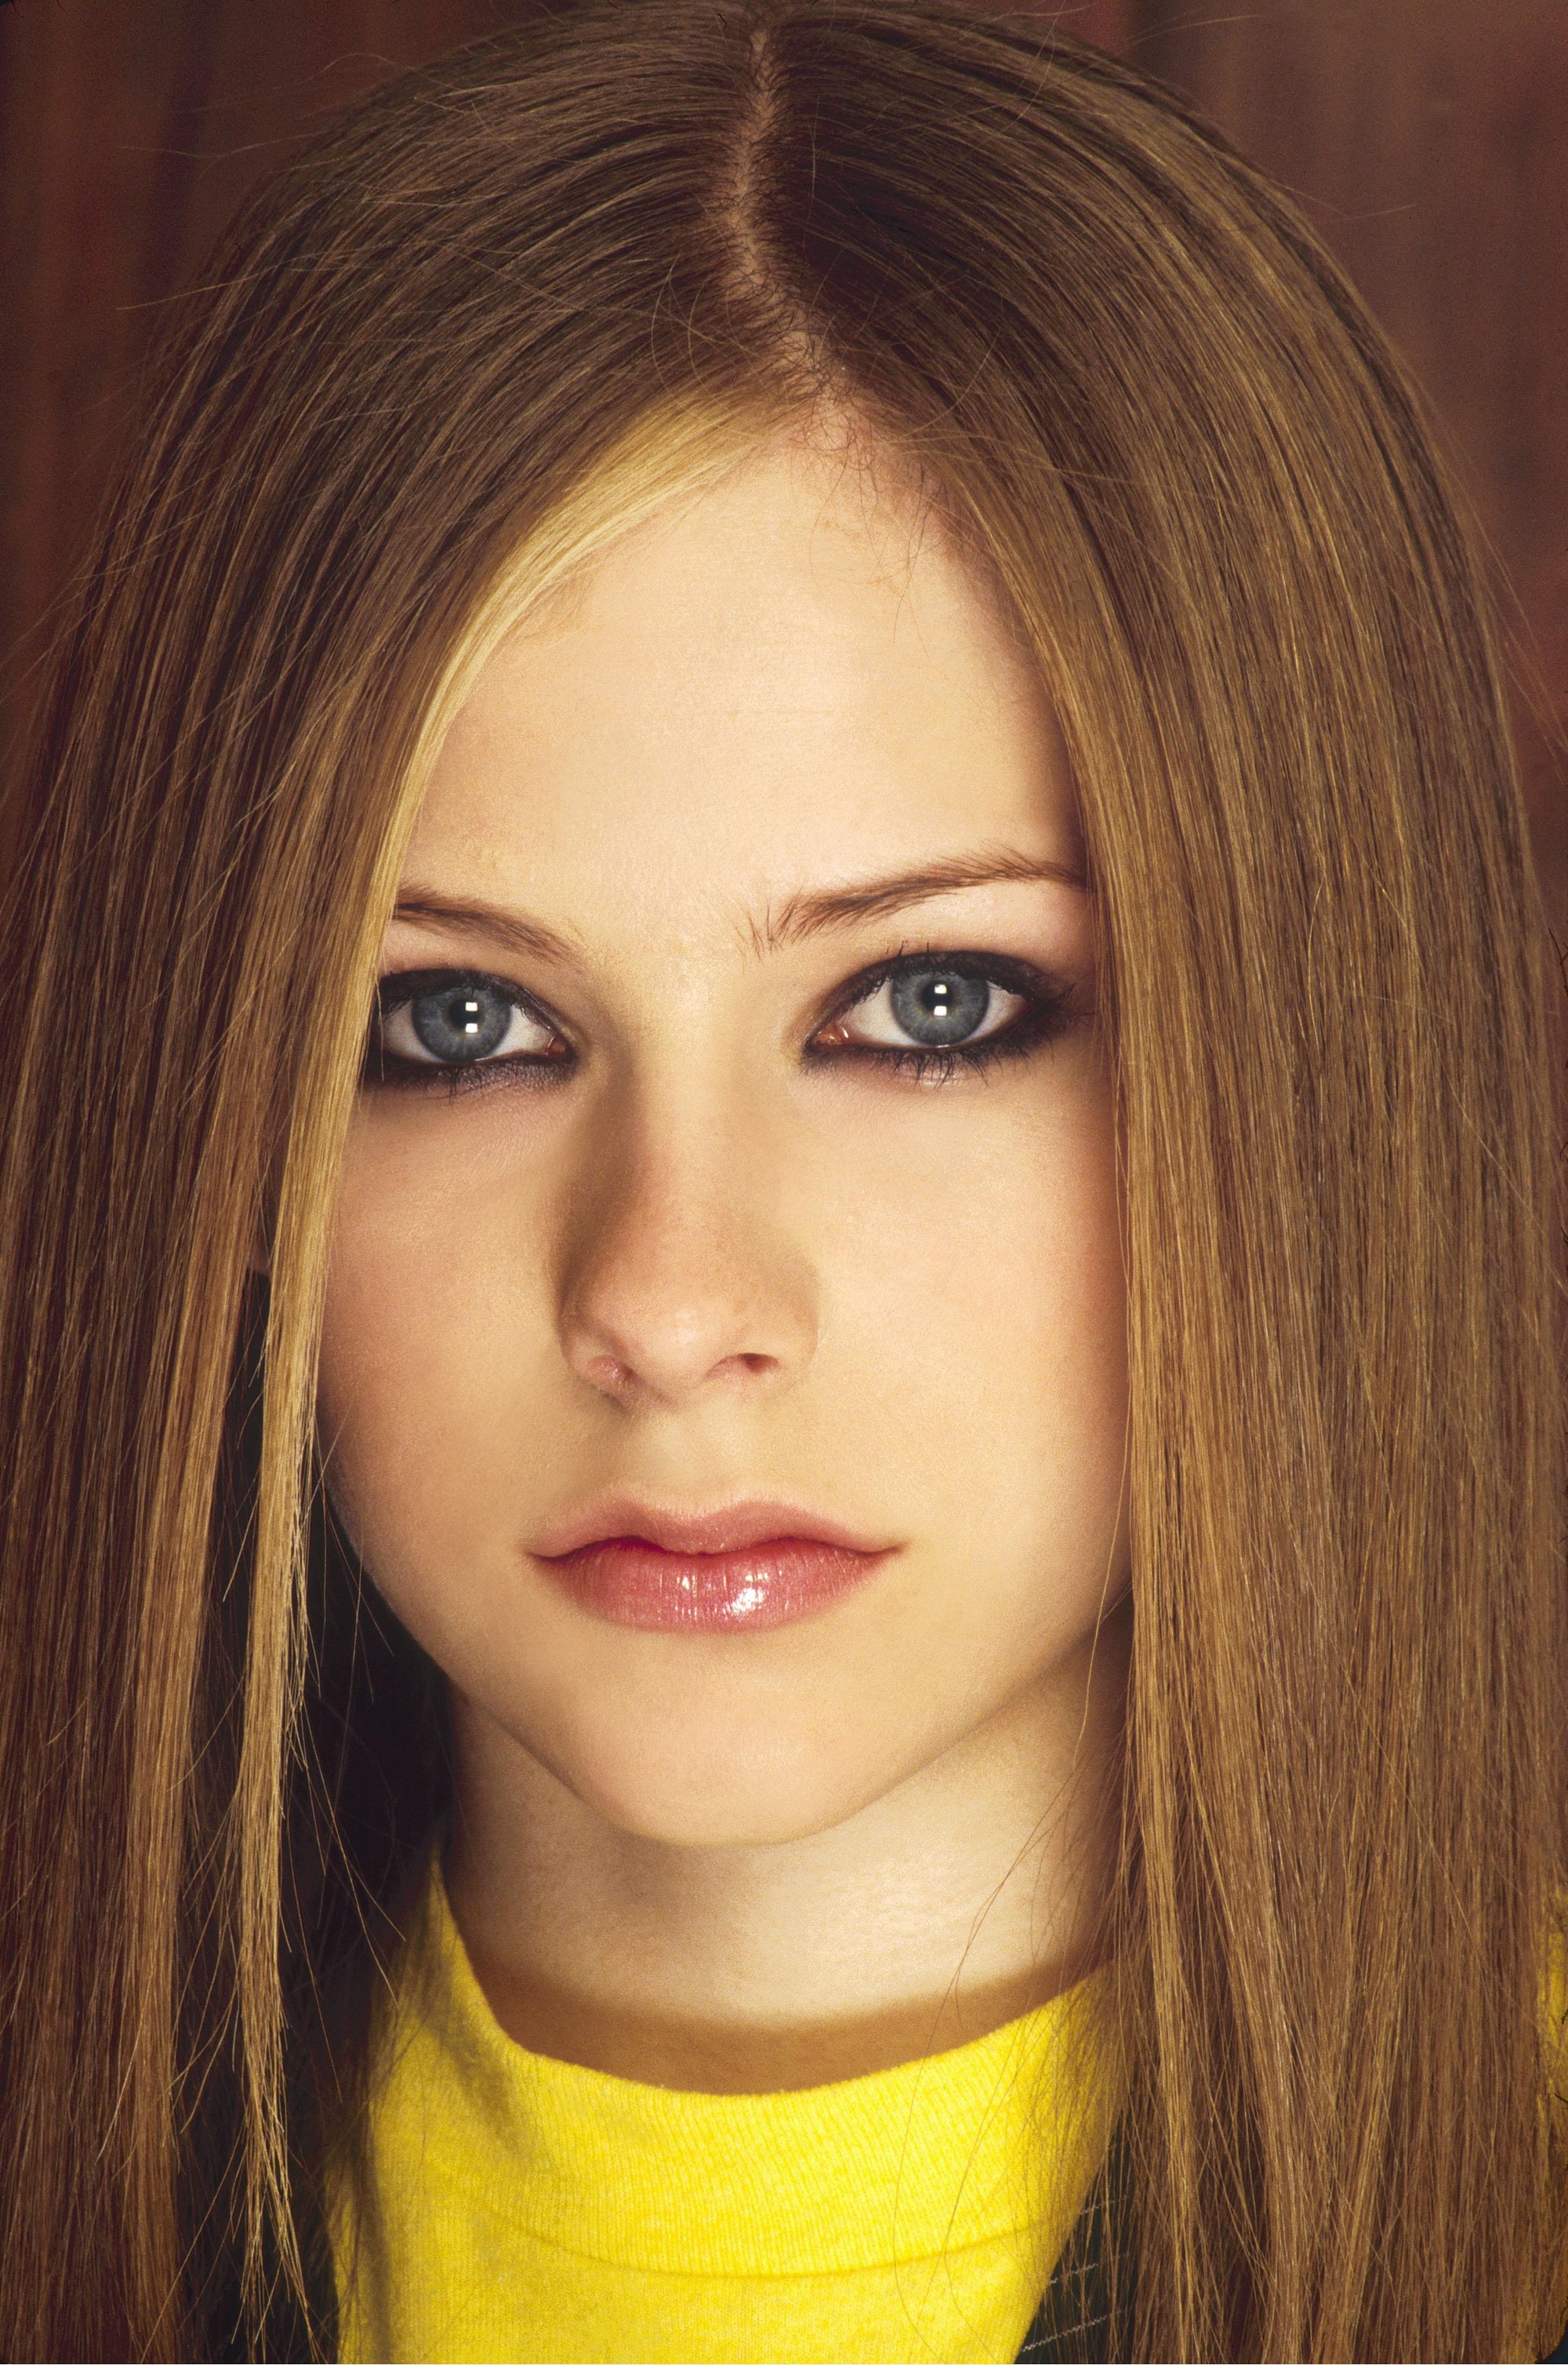 avril - arena magazine 013 - Avril Lavigne Singers Photo - Celebs101.com